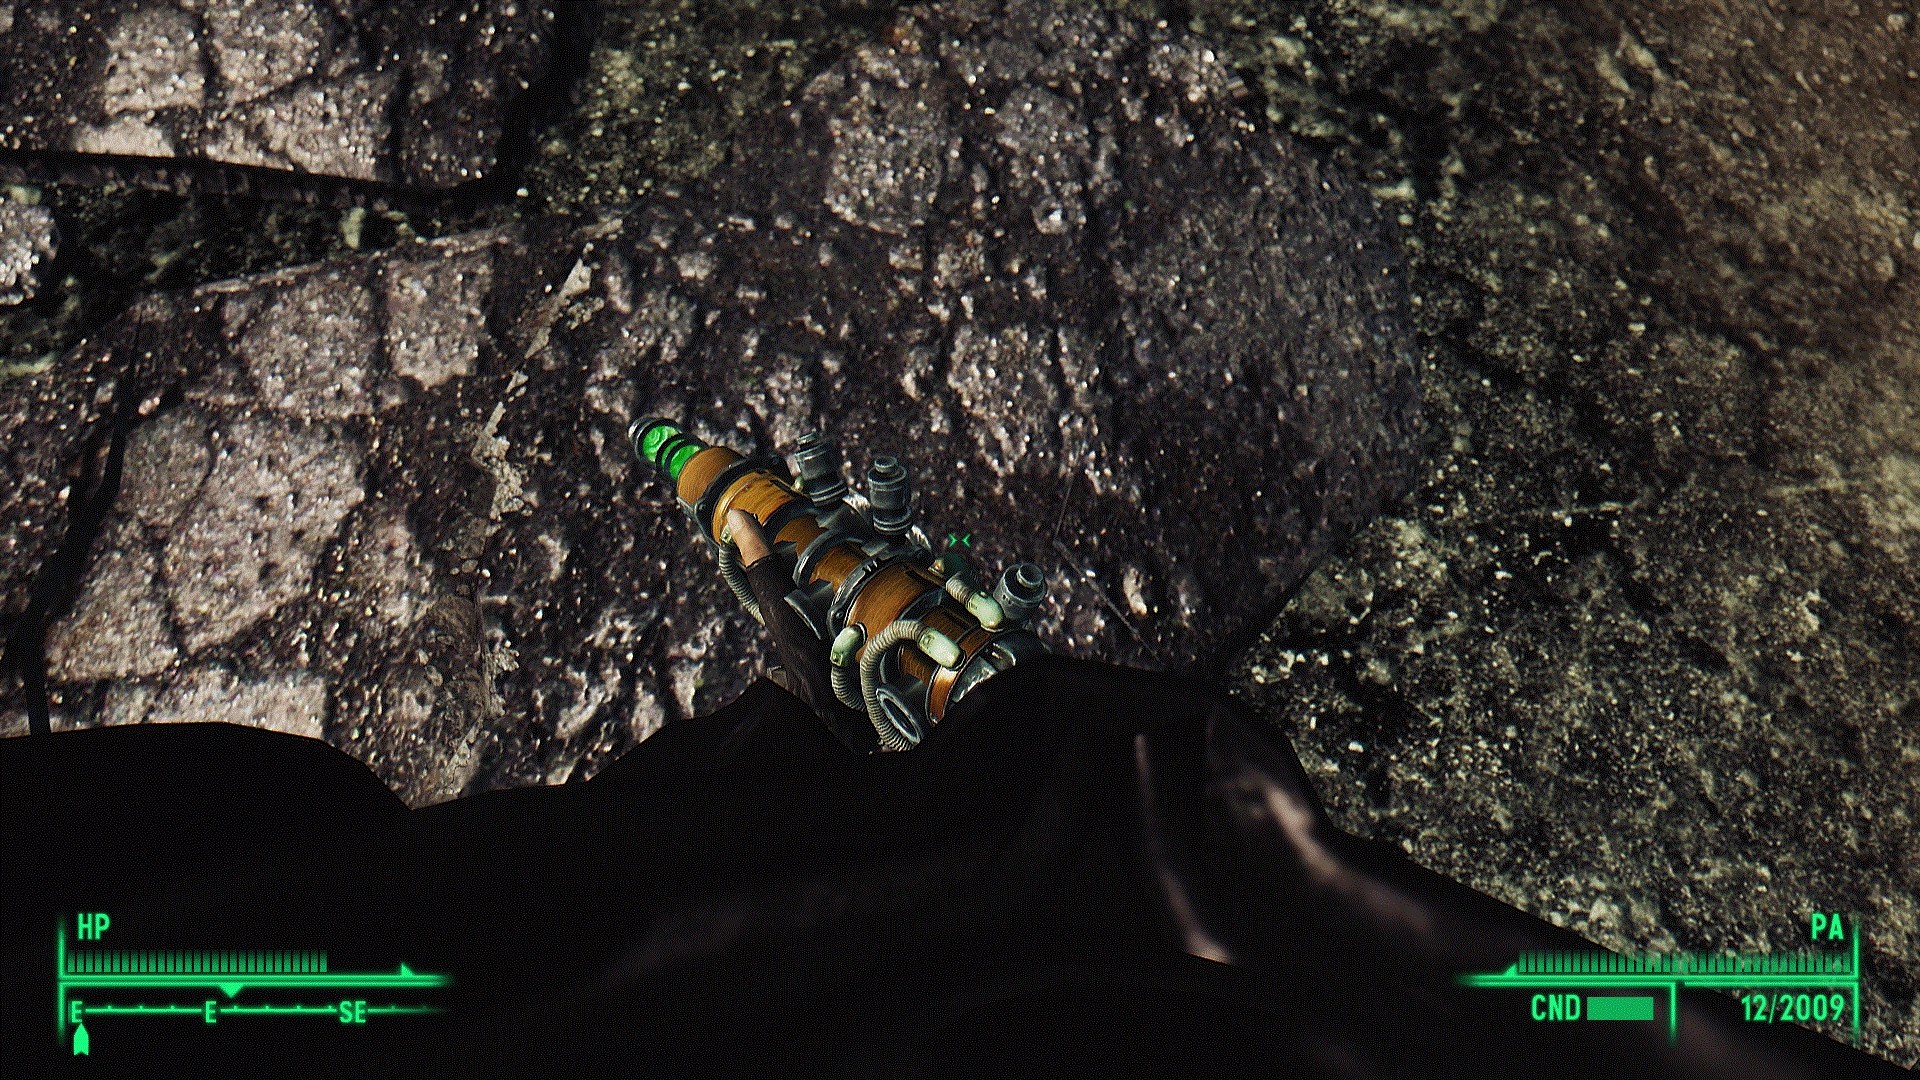 fallout 3 reanimation reborn for enhanced camera at fallout3 nexus